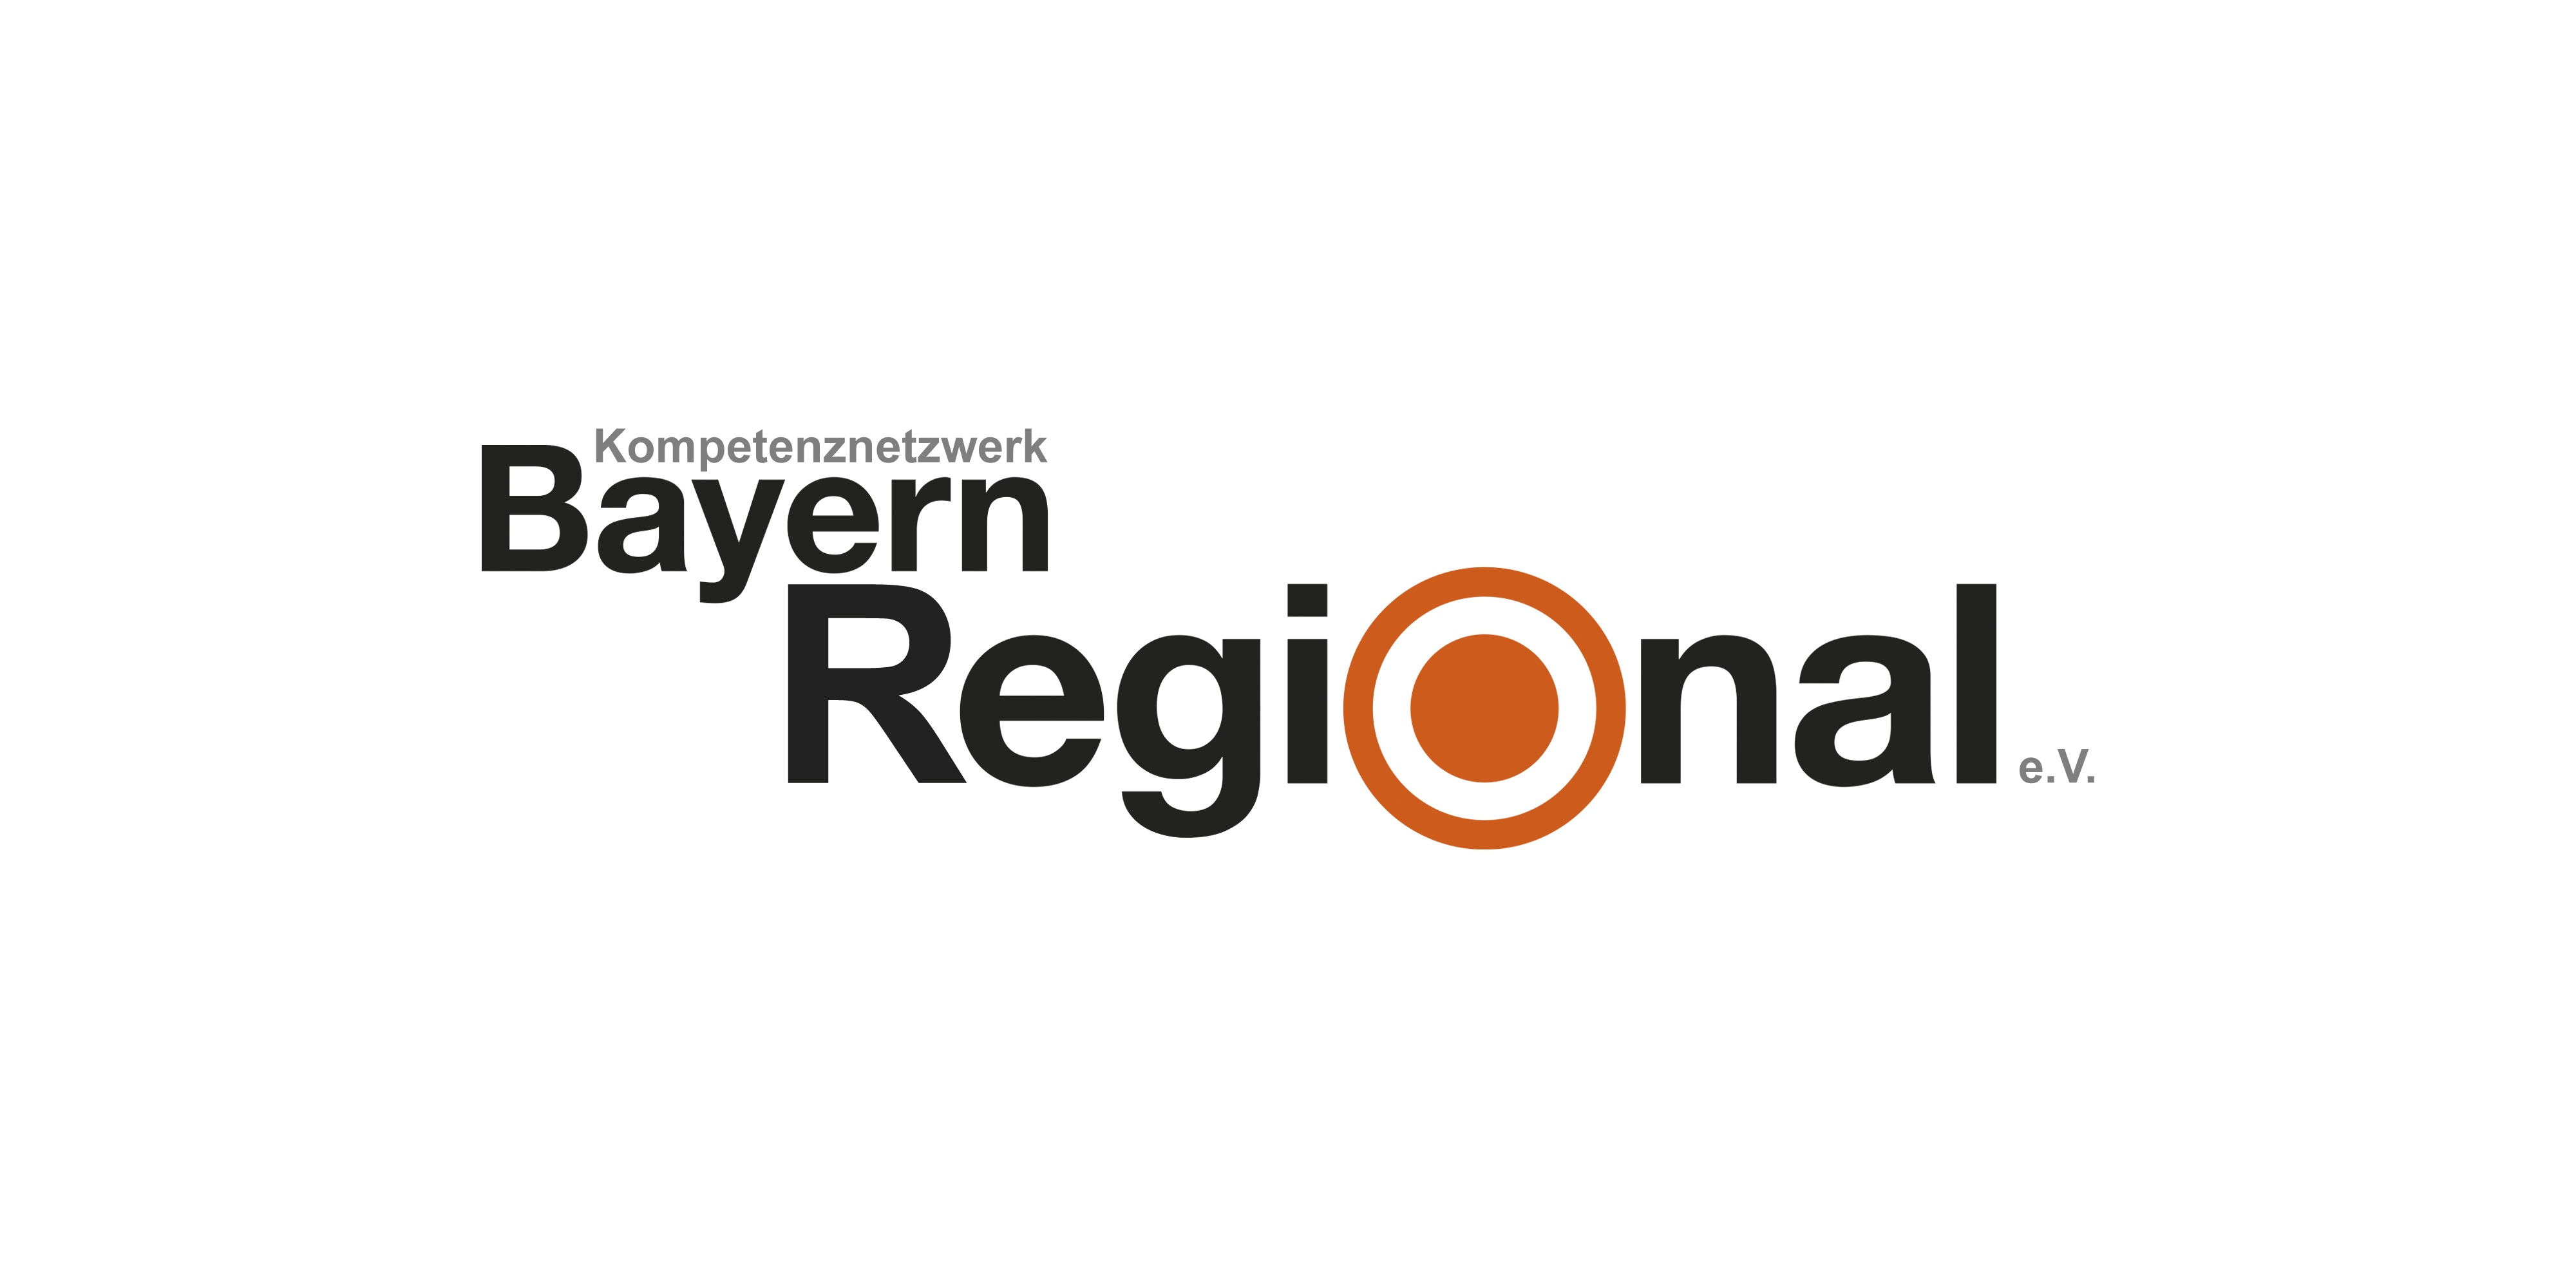 Zur externen Seite Bayern Regional e.V. unter www.bayernregional.org